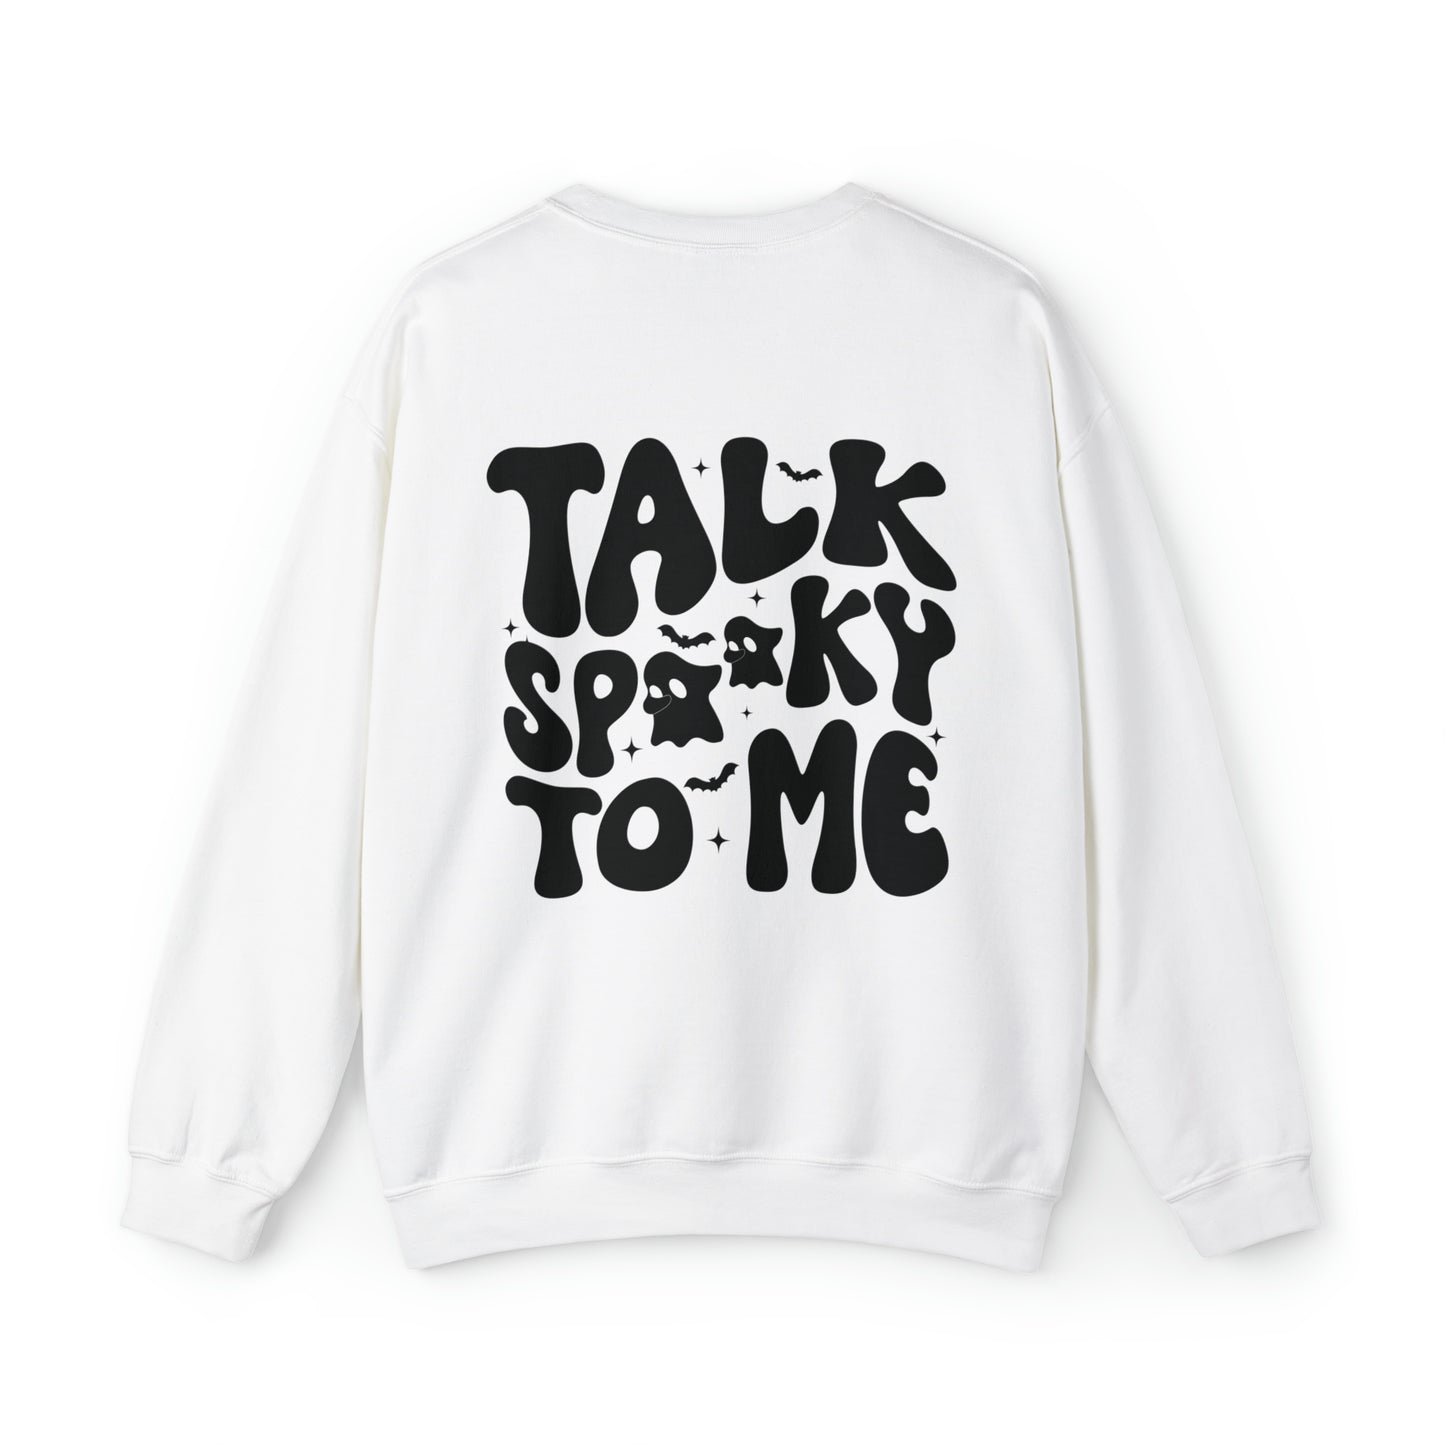 Talk Spooky To Me Ghost Halloween Sweatshirt